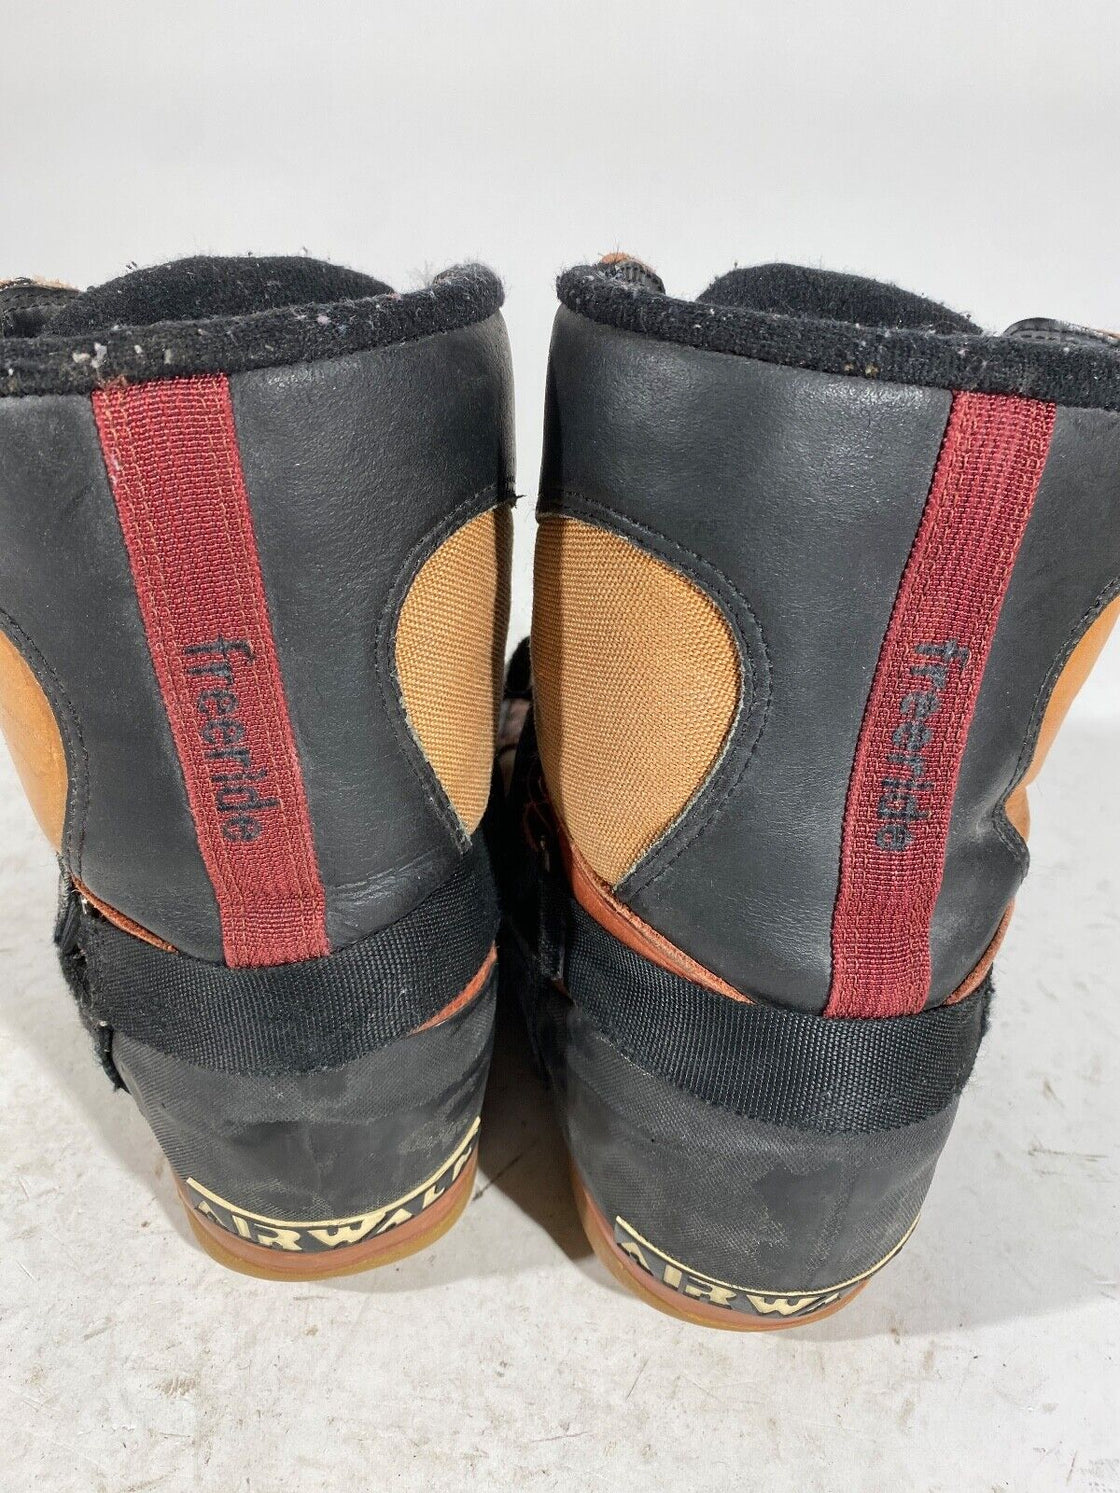 AIRWALK Vintage Snowboard Boots Retro Style Size EU42, US8, UK7, Mondo 260 mm